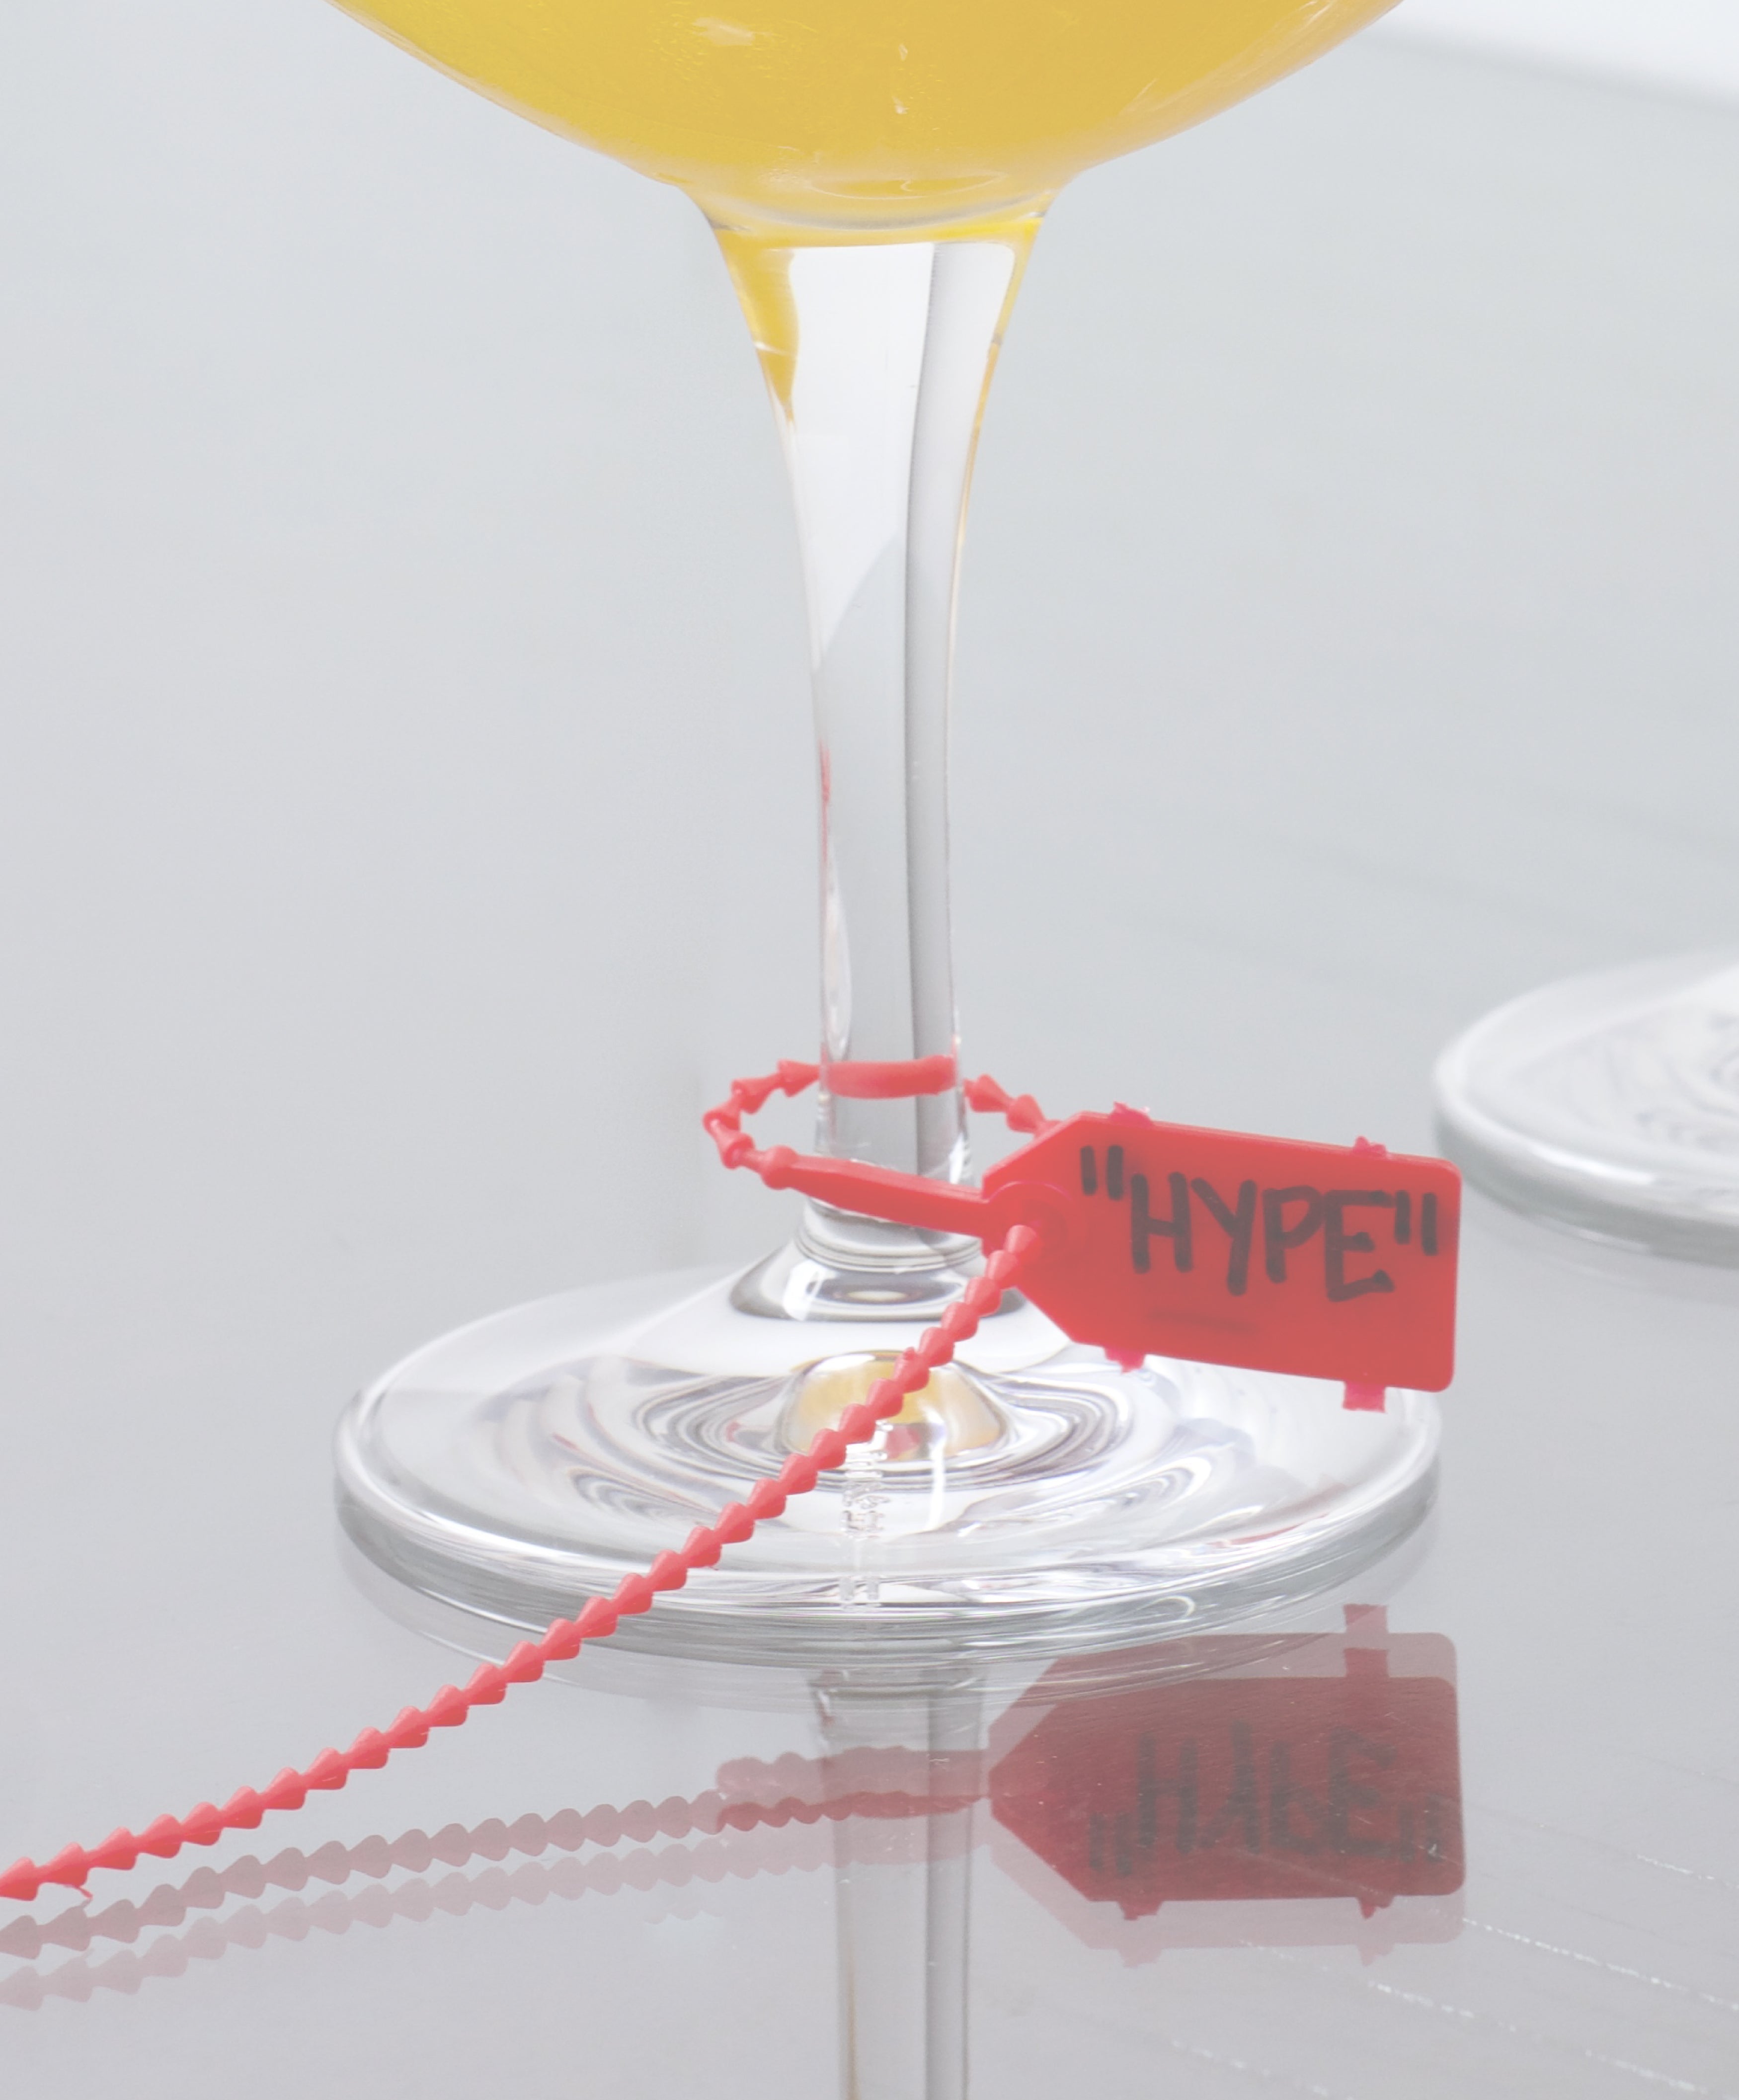 The "HYPE" TeKu Glass